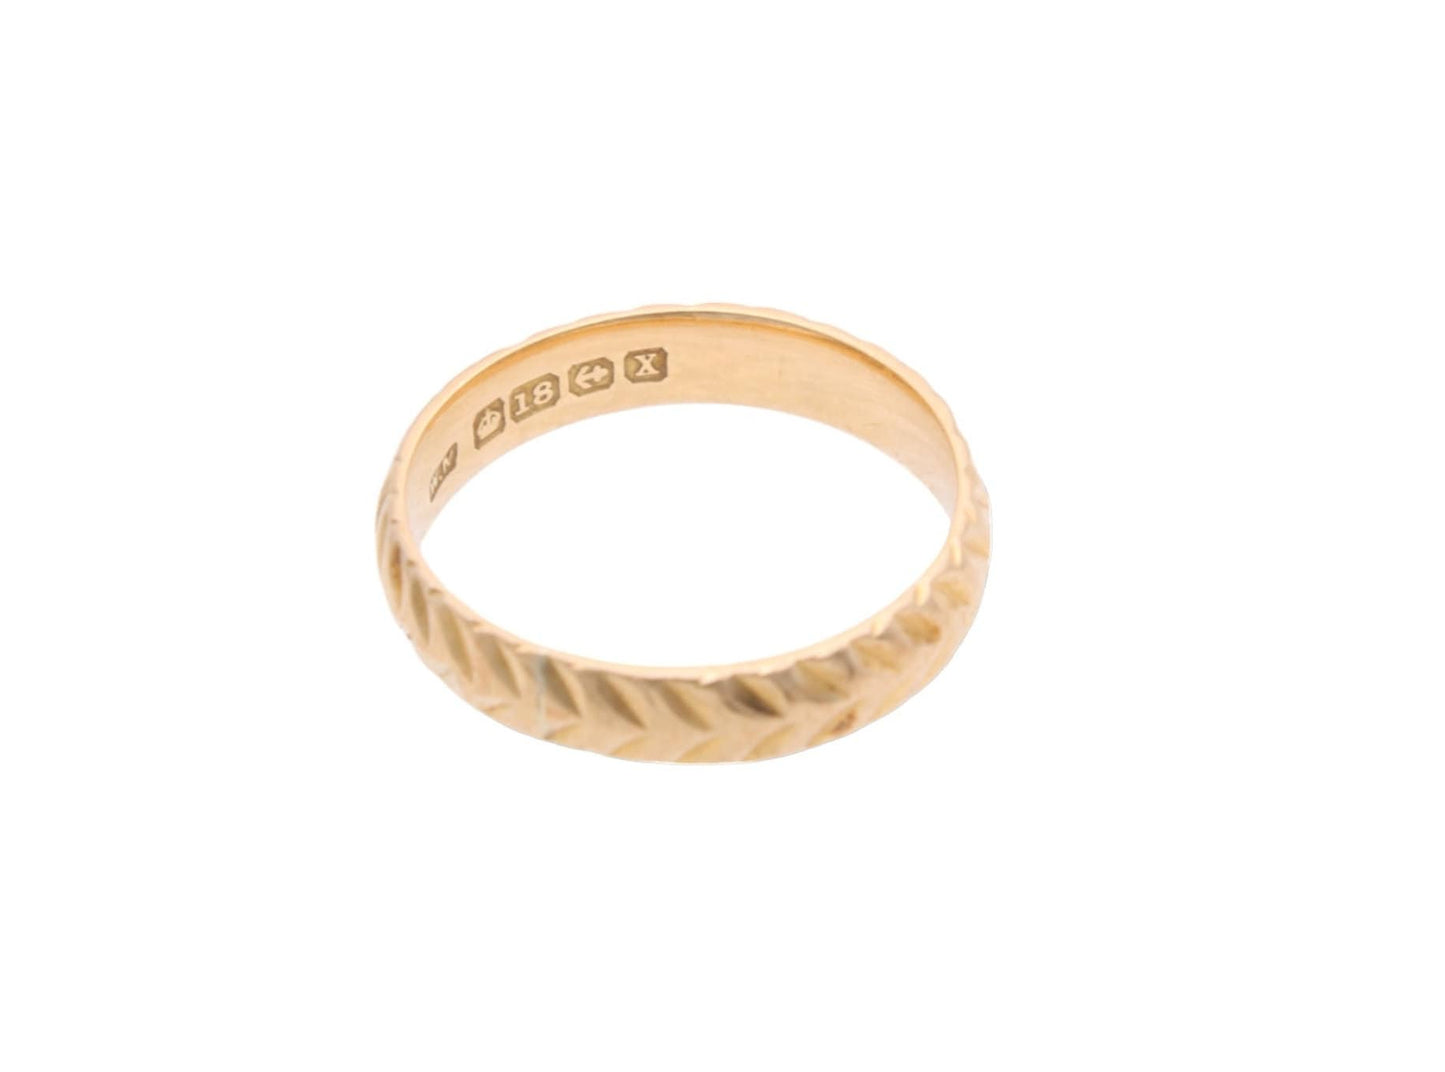 Antique Art Deco 18ct Gold Wedding Ring